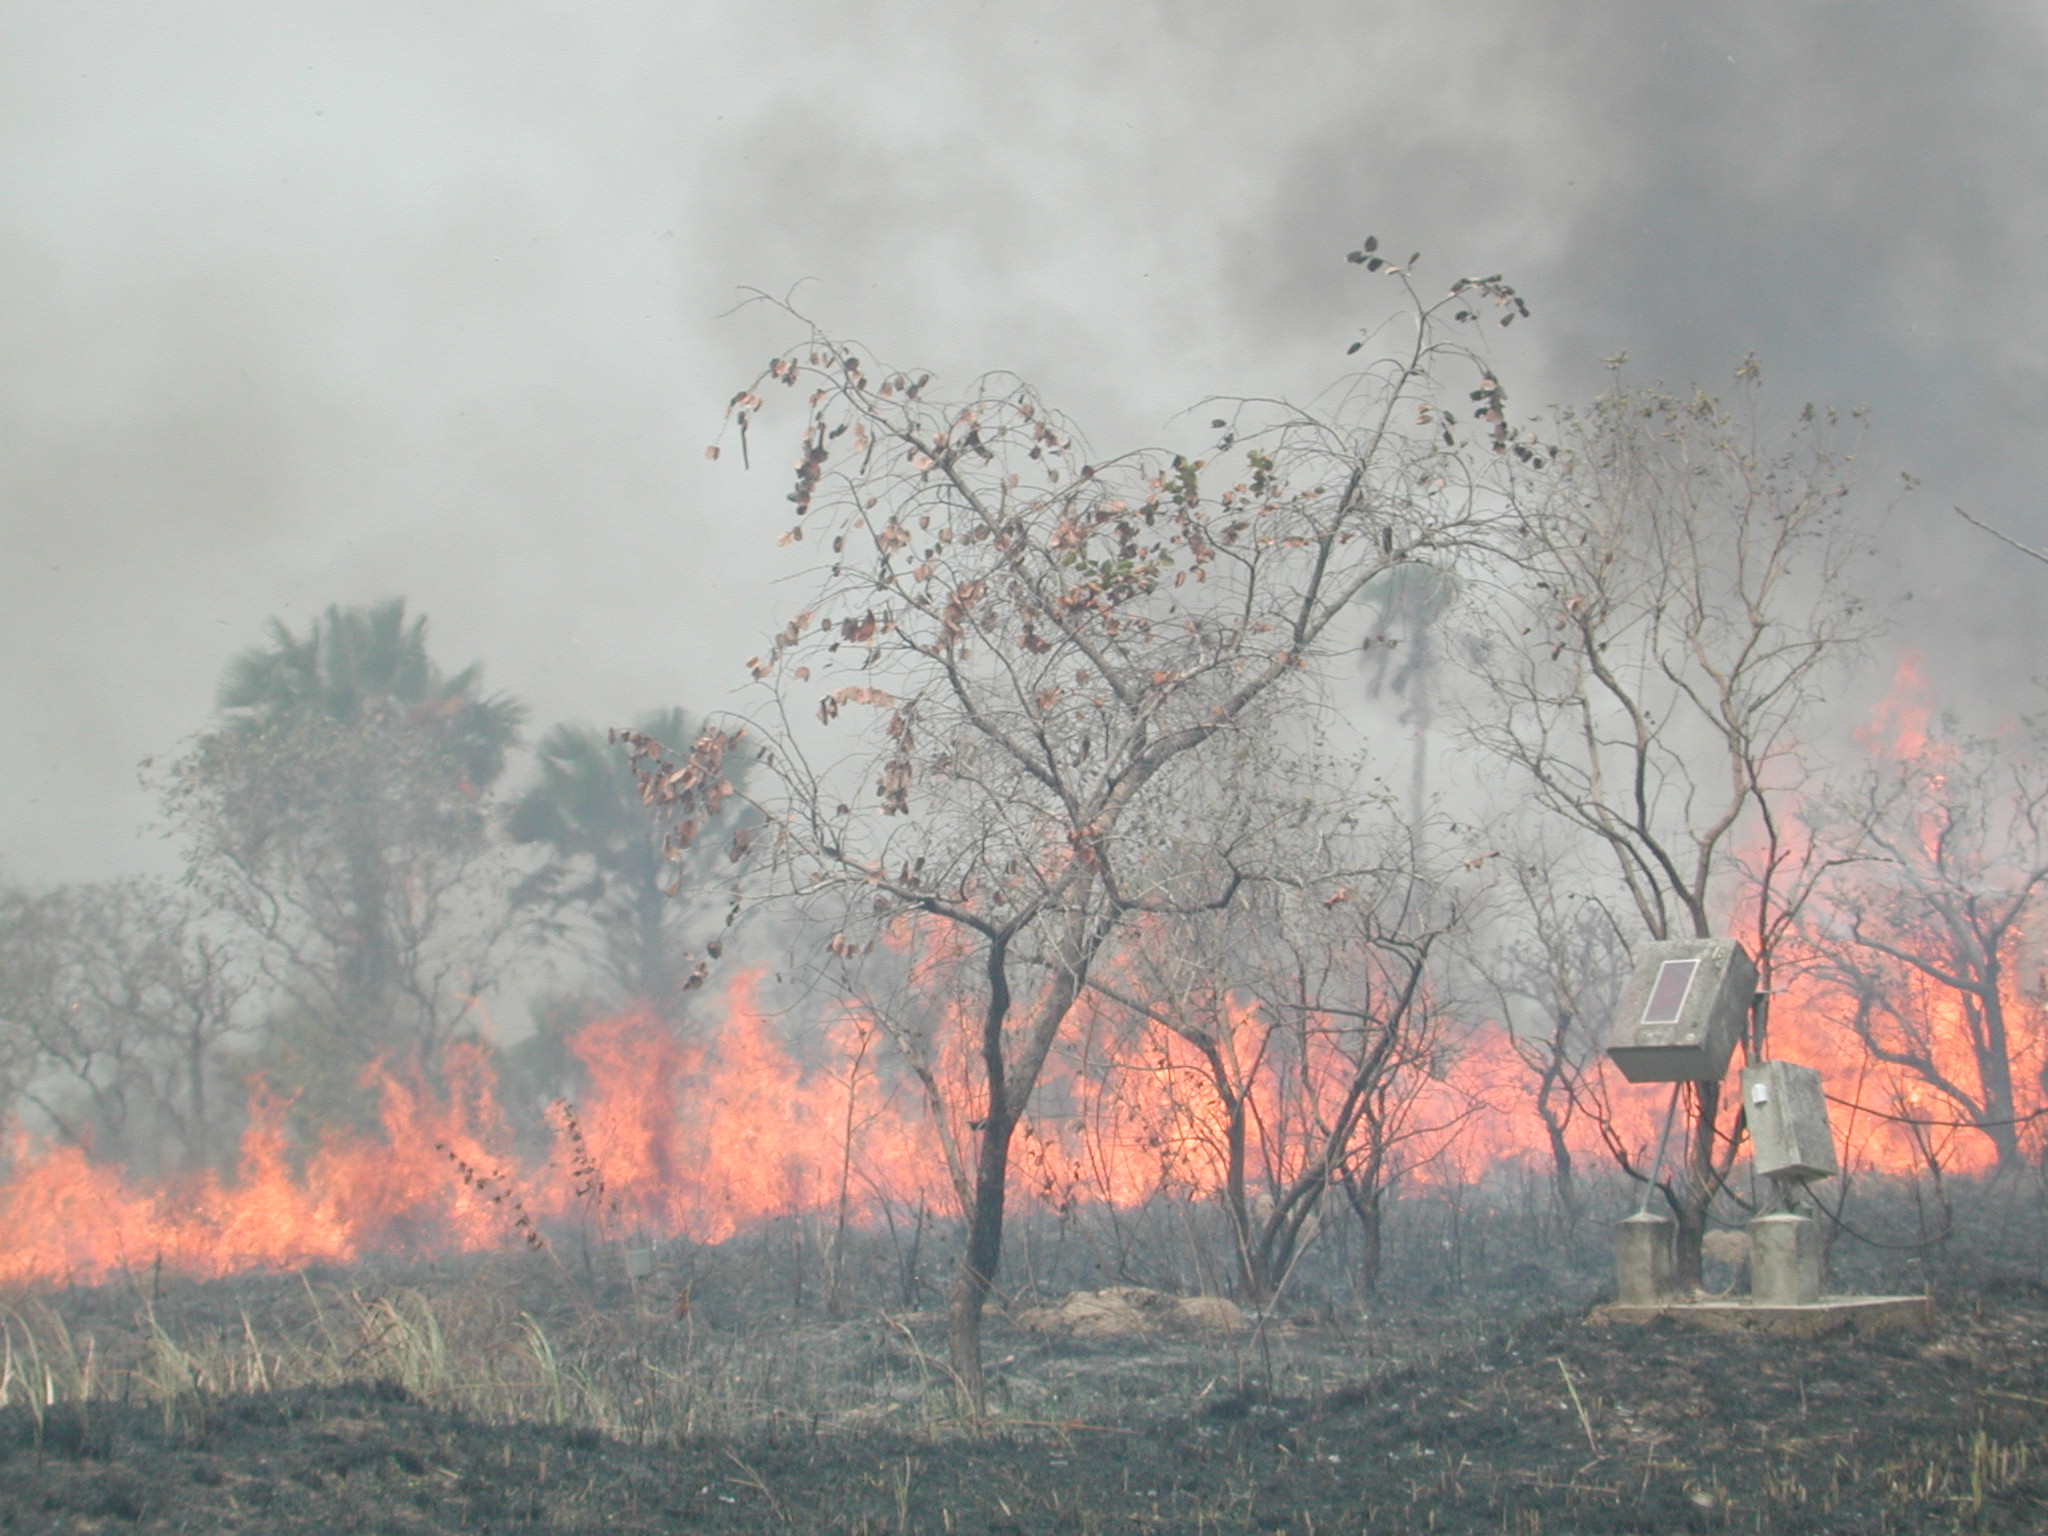 annual bush fire in the savanna